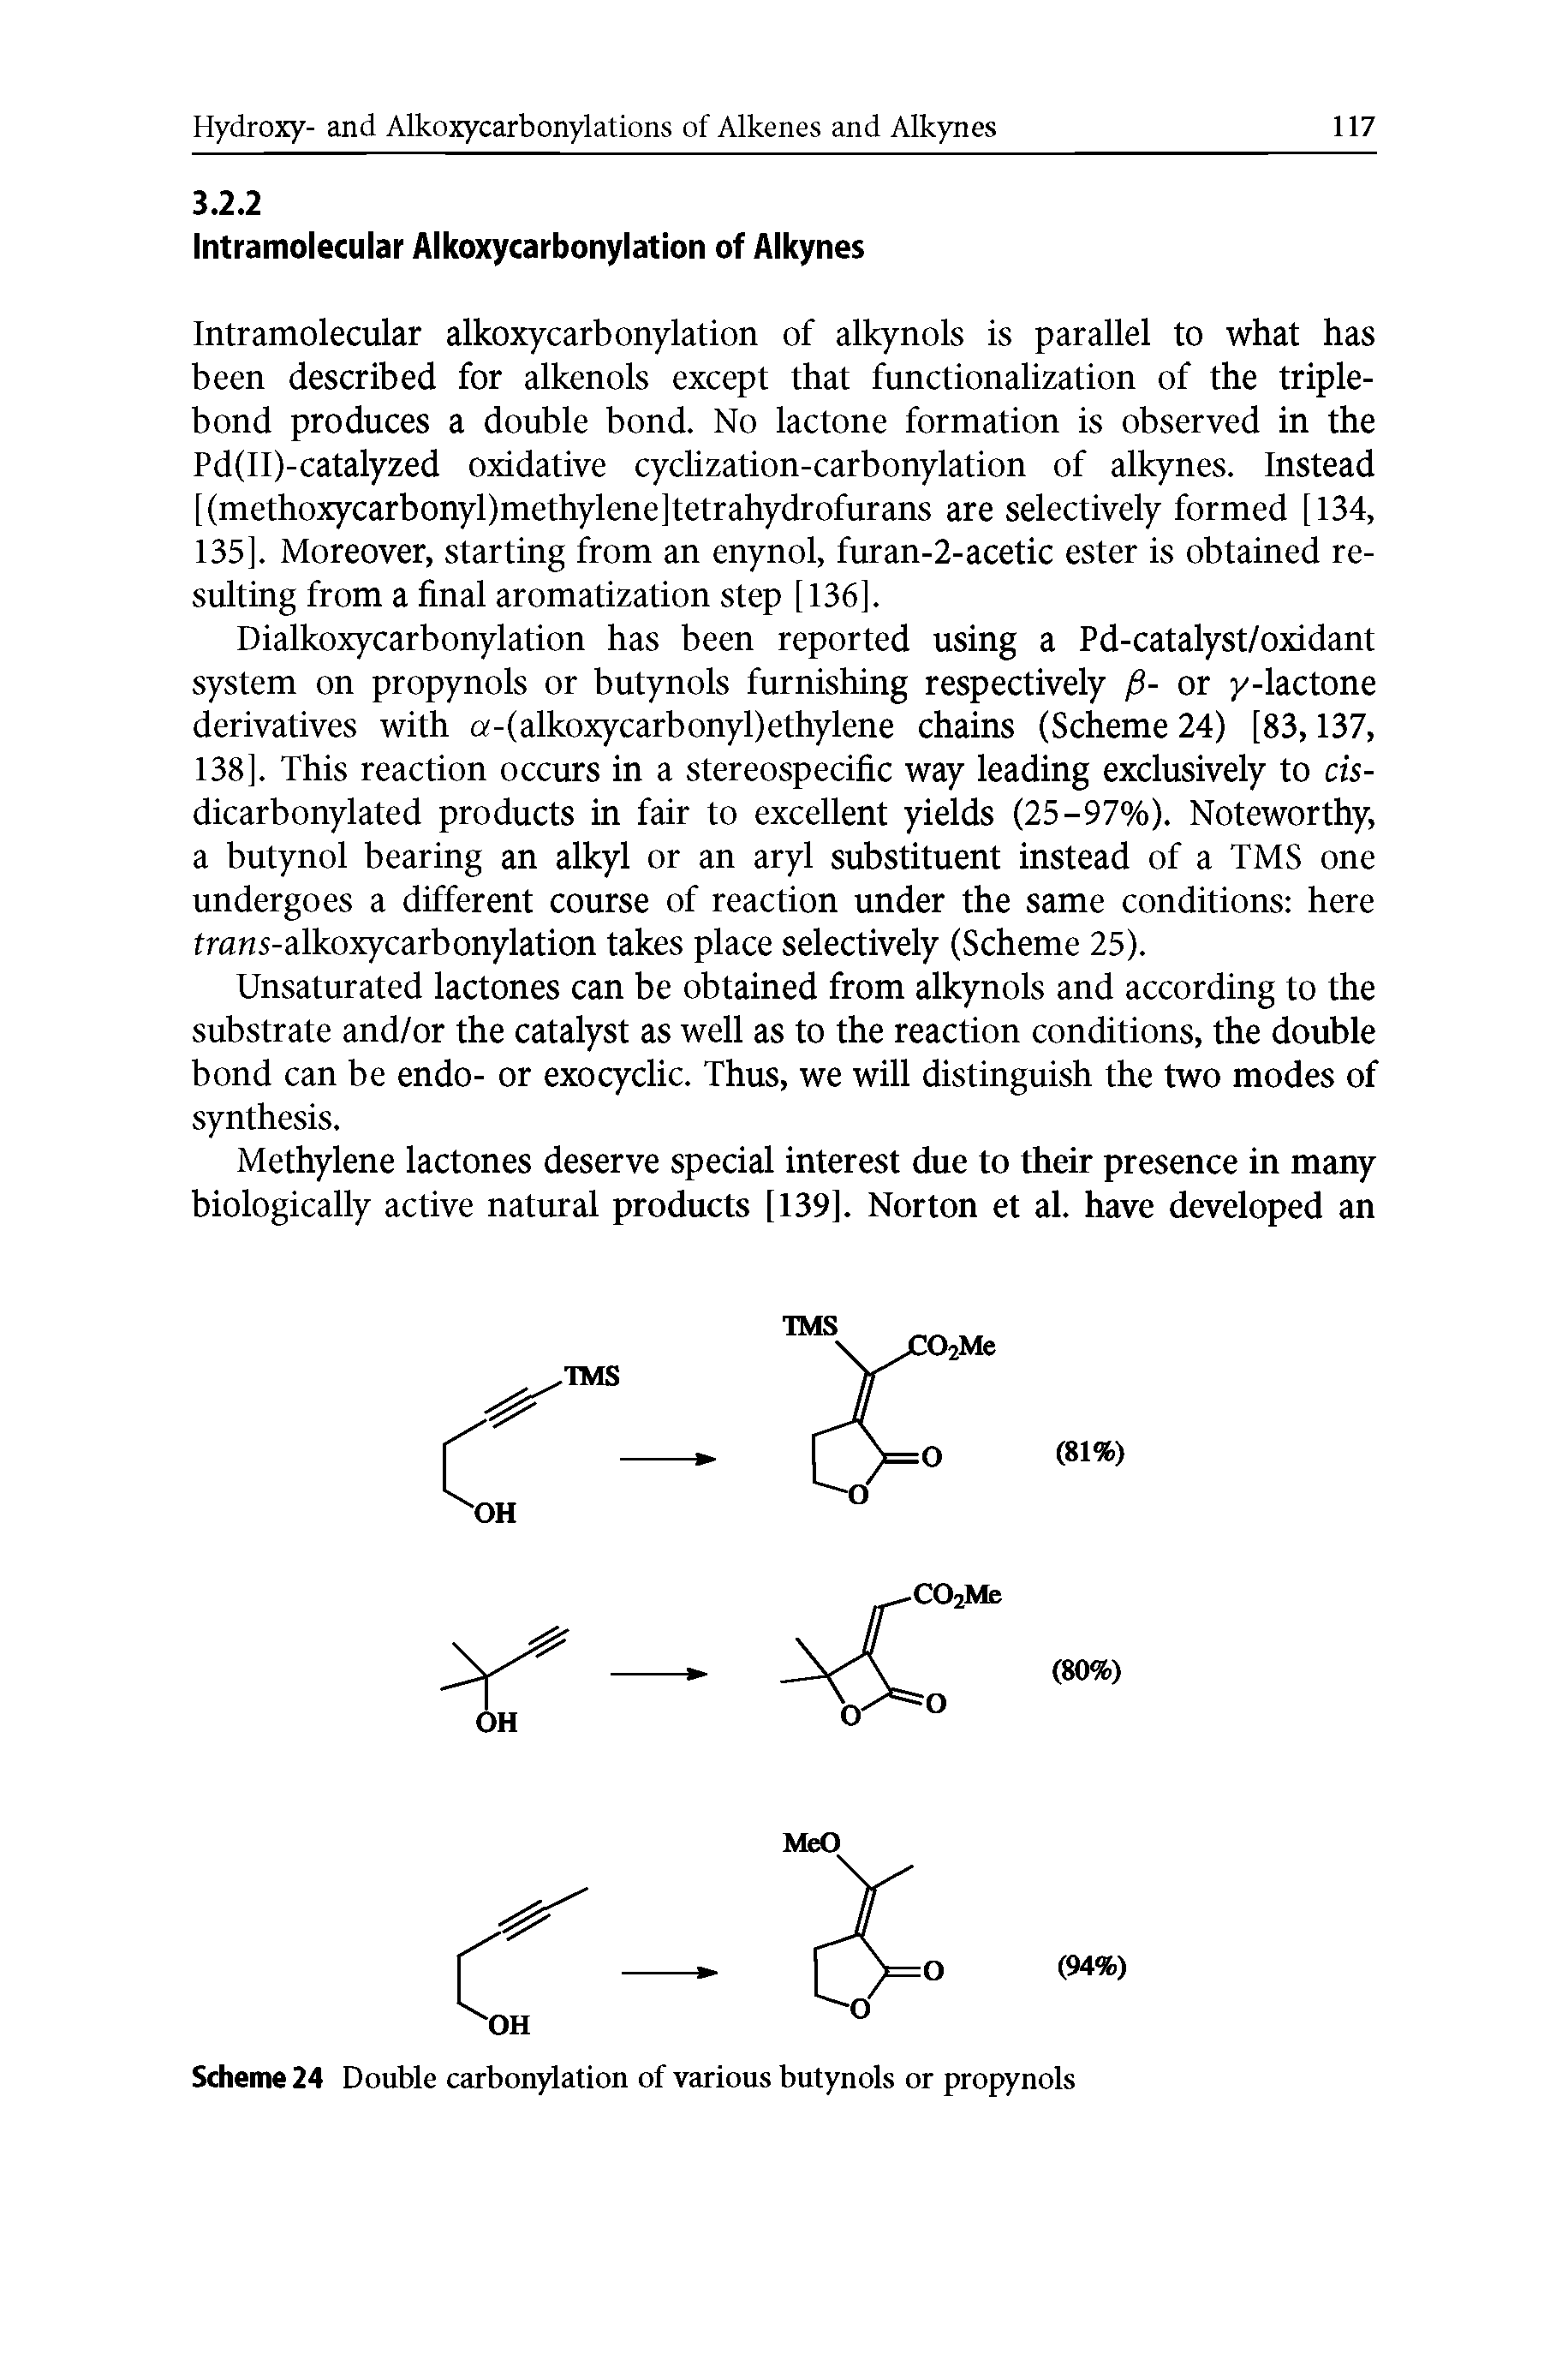 Scheme 24 Double carbonylation of various butynols or propynols...